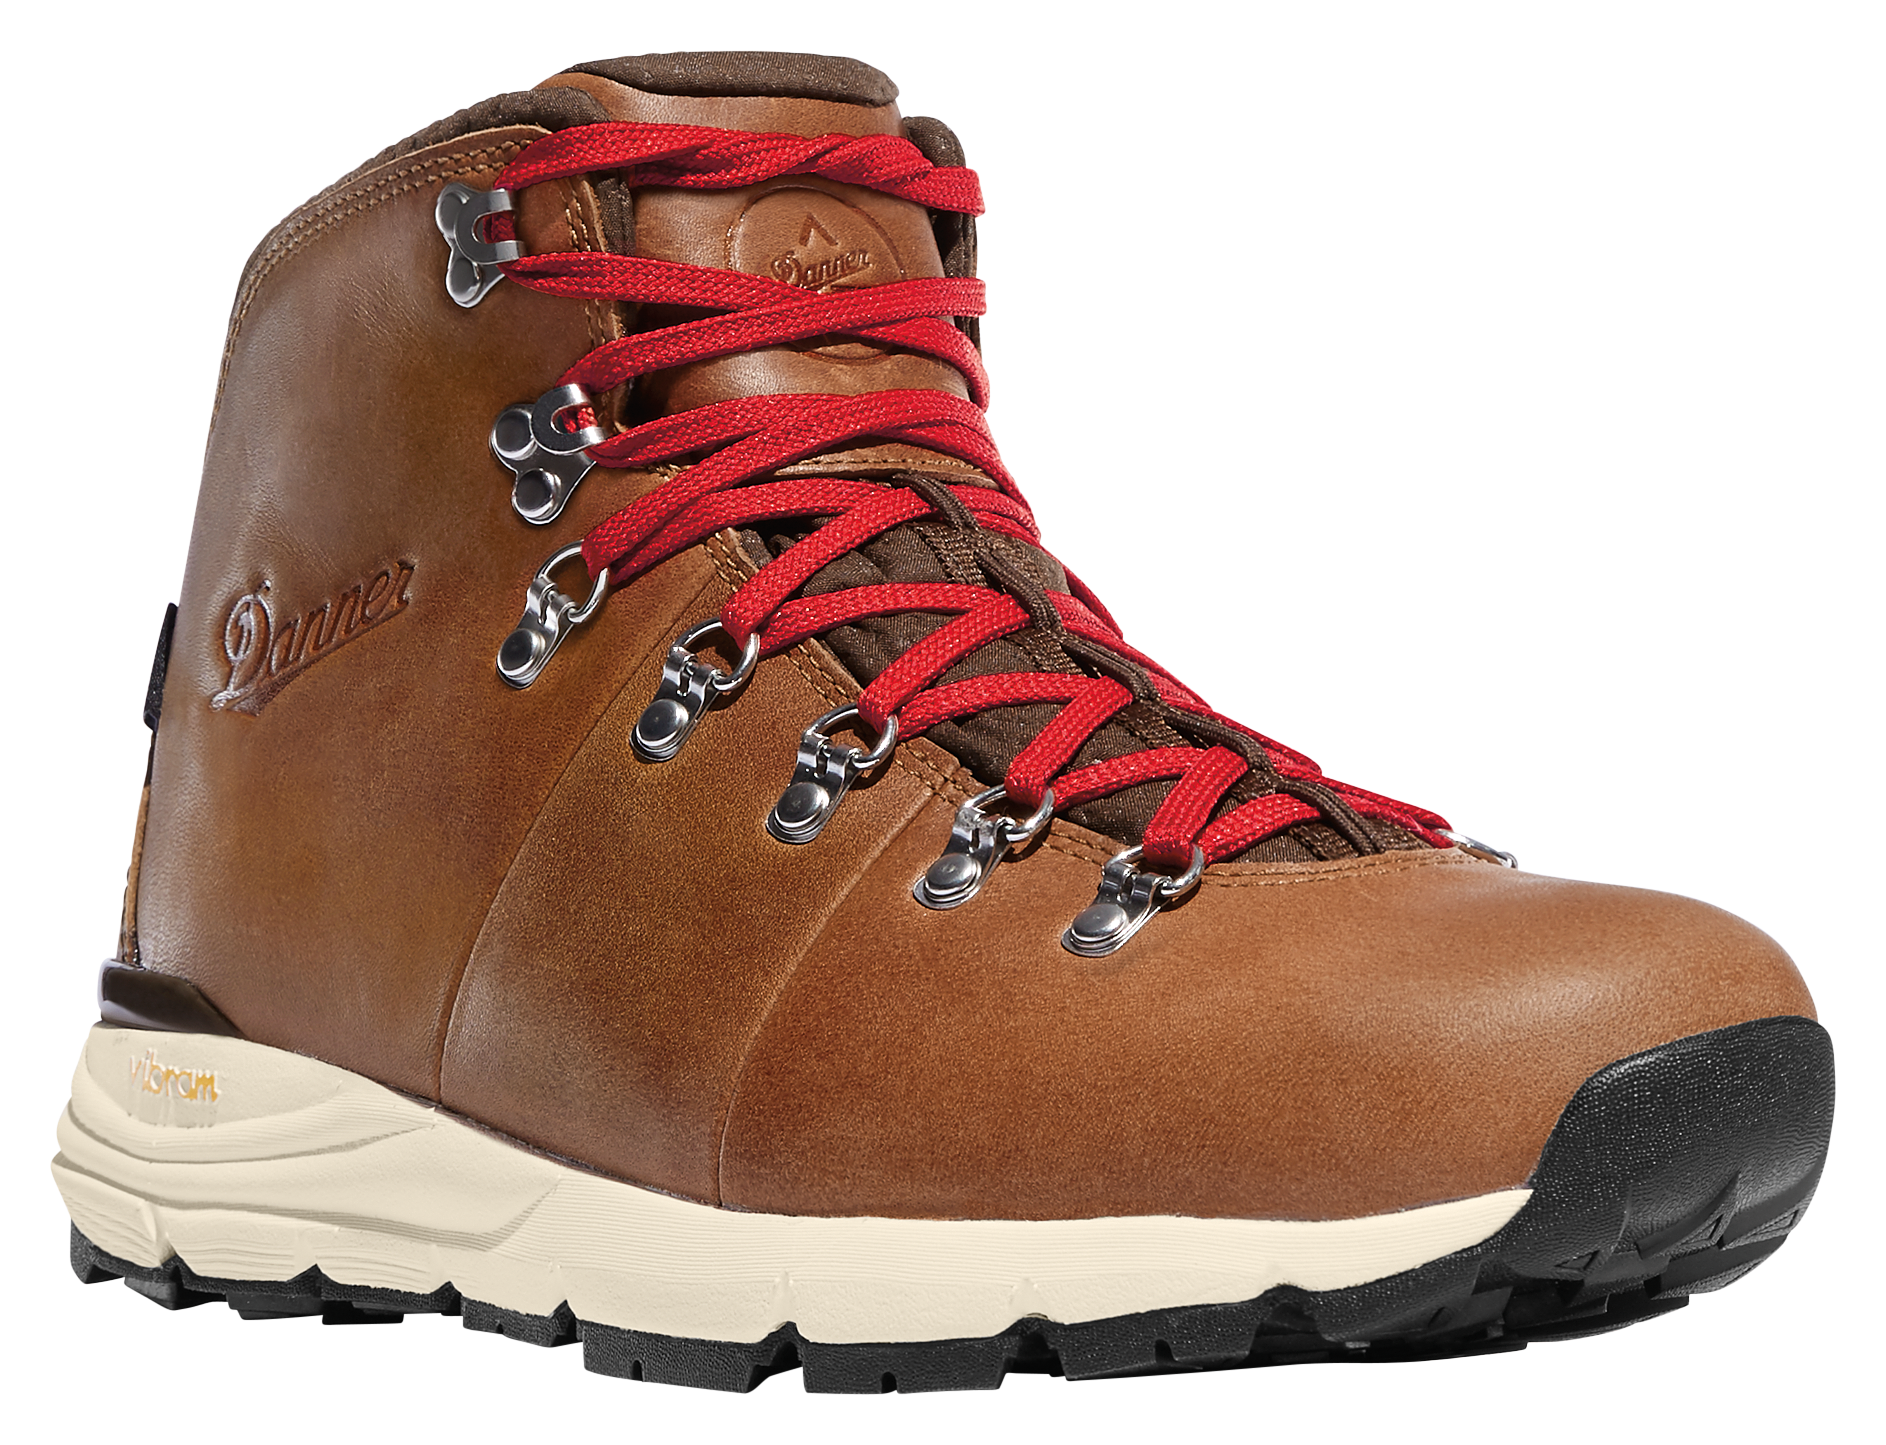 Danner Mountain 600 Waterproof Hiking Boots for Men - Saddle Tan - 7M